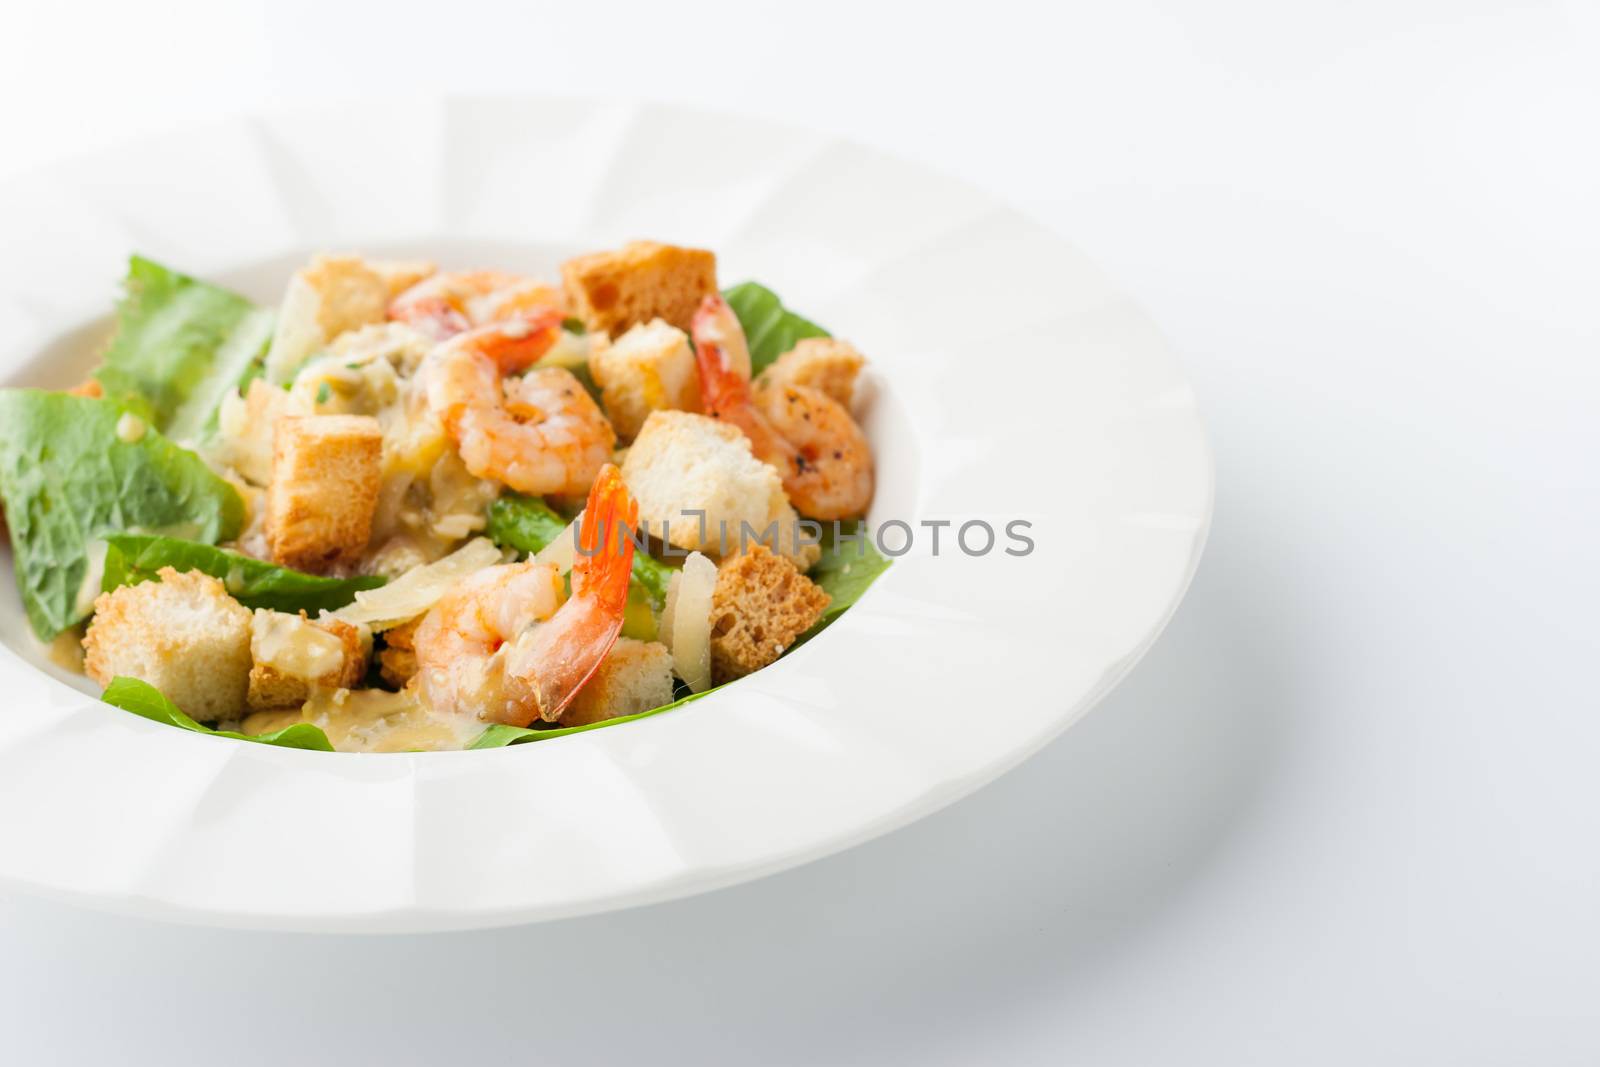 Caesar salad with shrimps by Deniskarpenkov